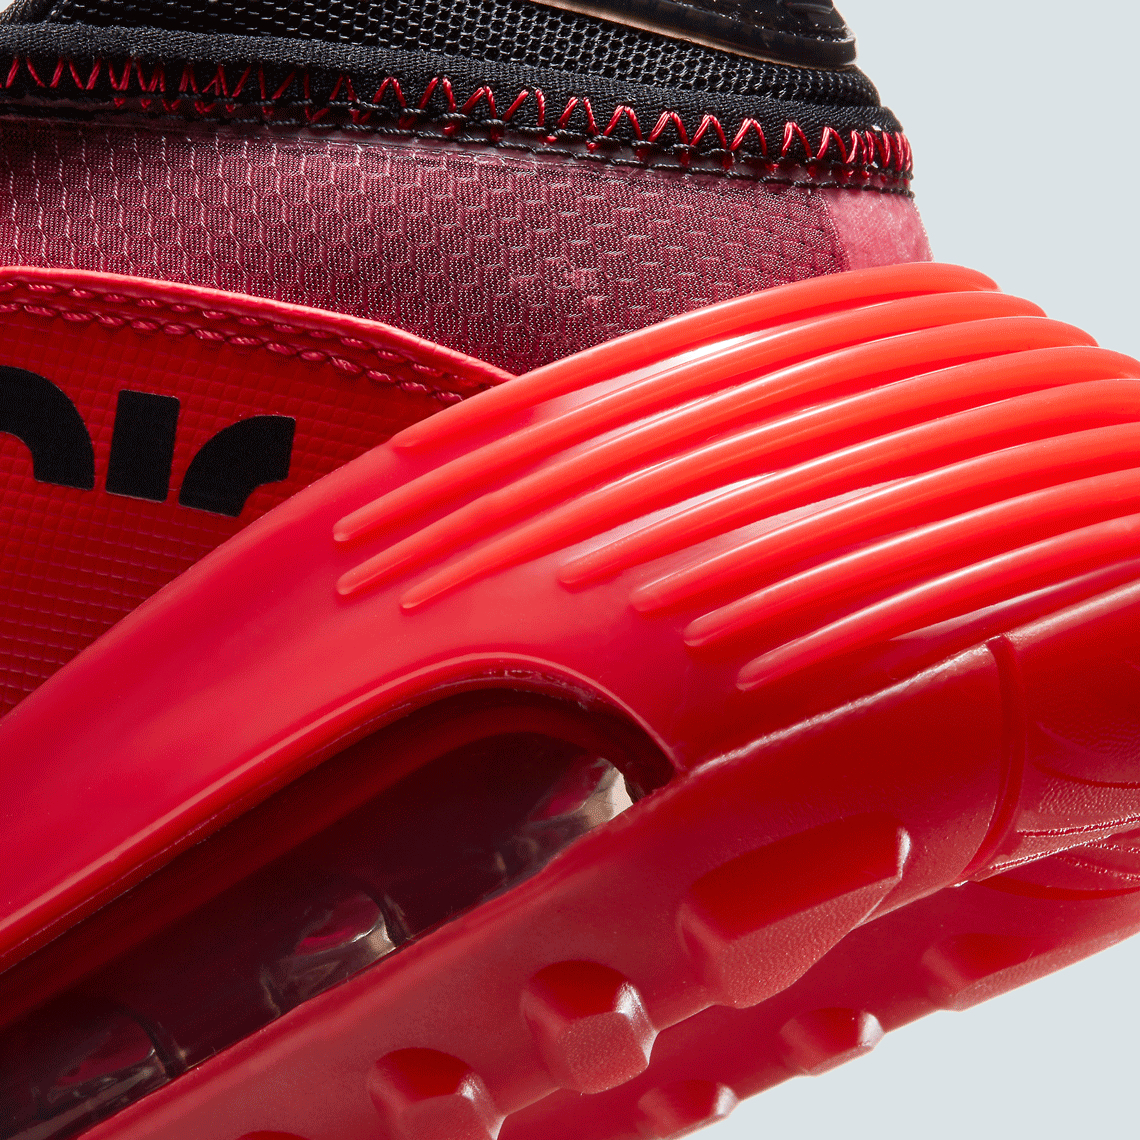 Nike Air Max 2090 Black Red DC1851-600 Release | SneakerNews.com